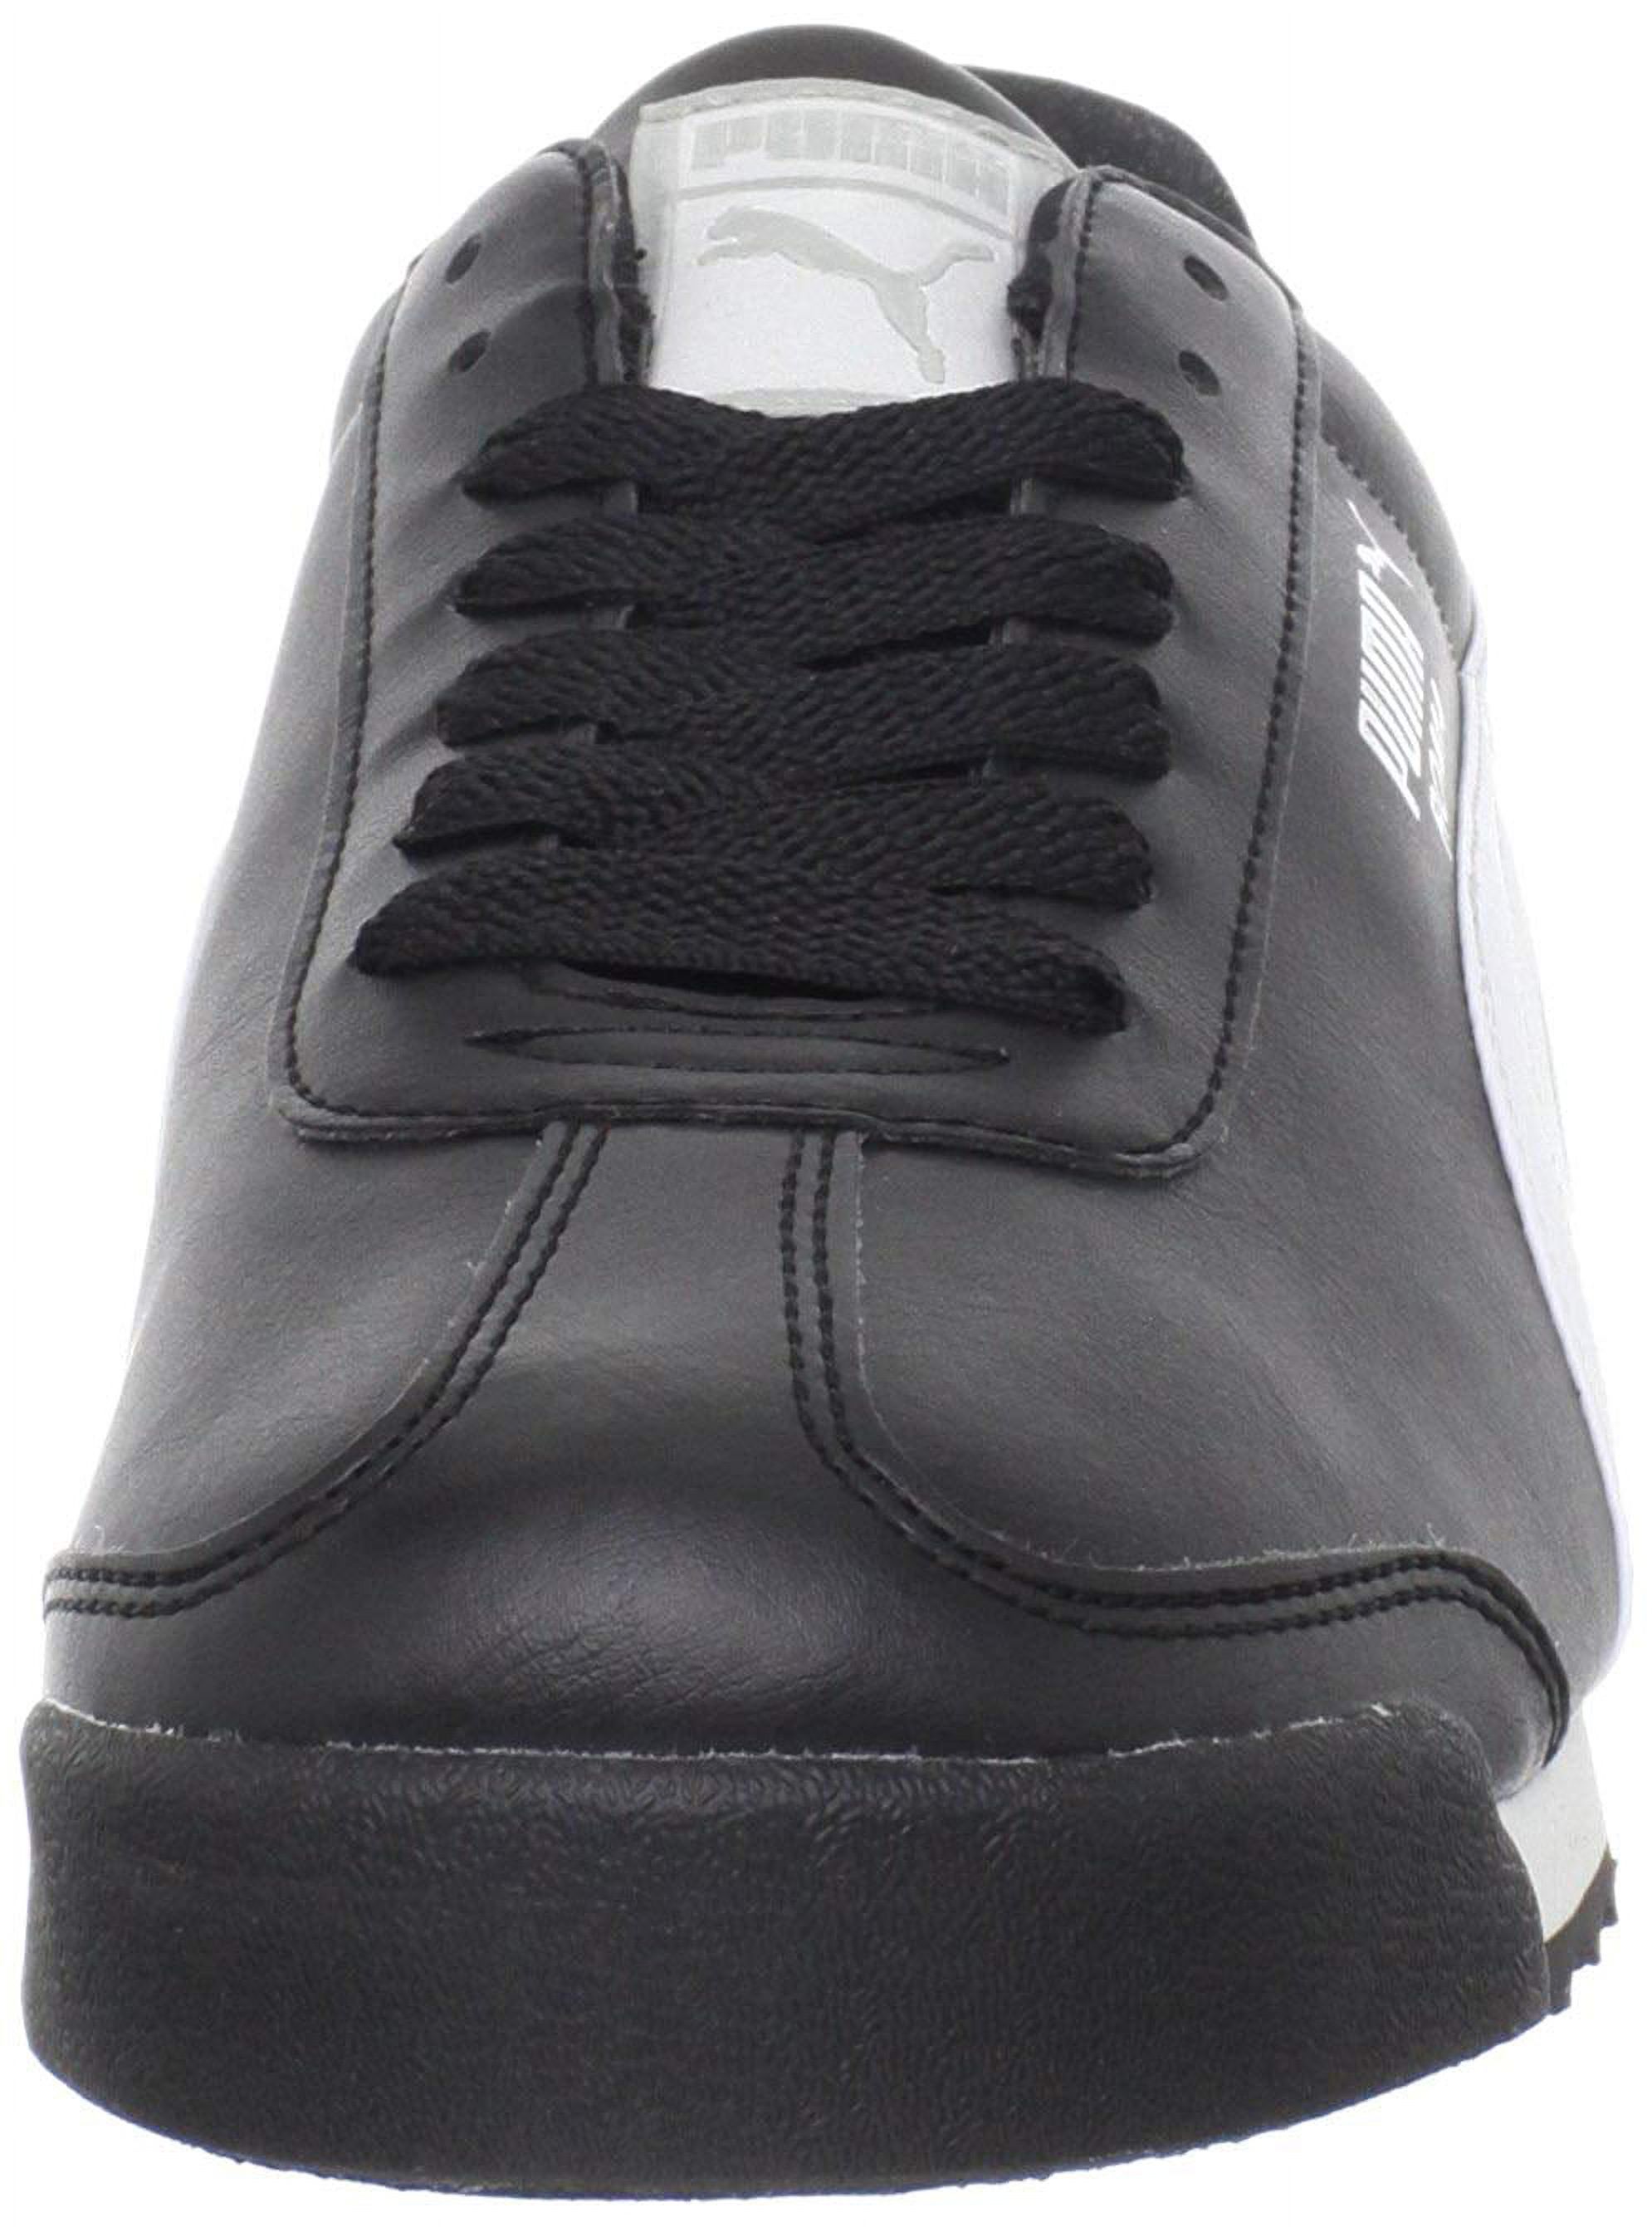 Puma Roma Basic Men's Shoes Black/White/Puma Sliver 353572-11 - image 5 of 7